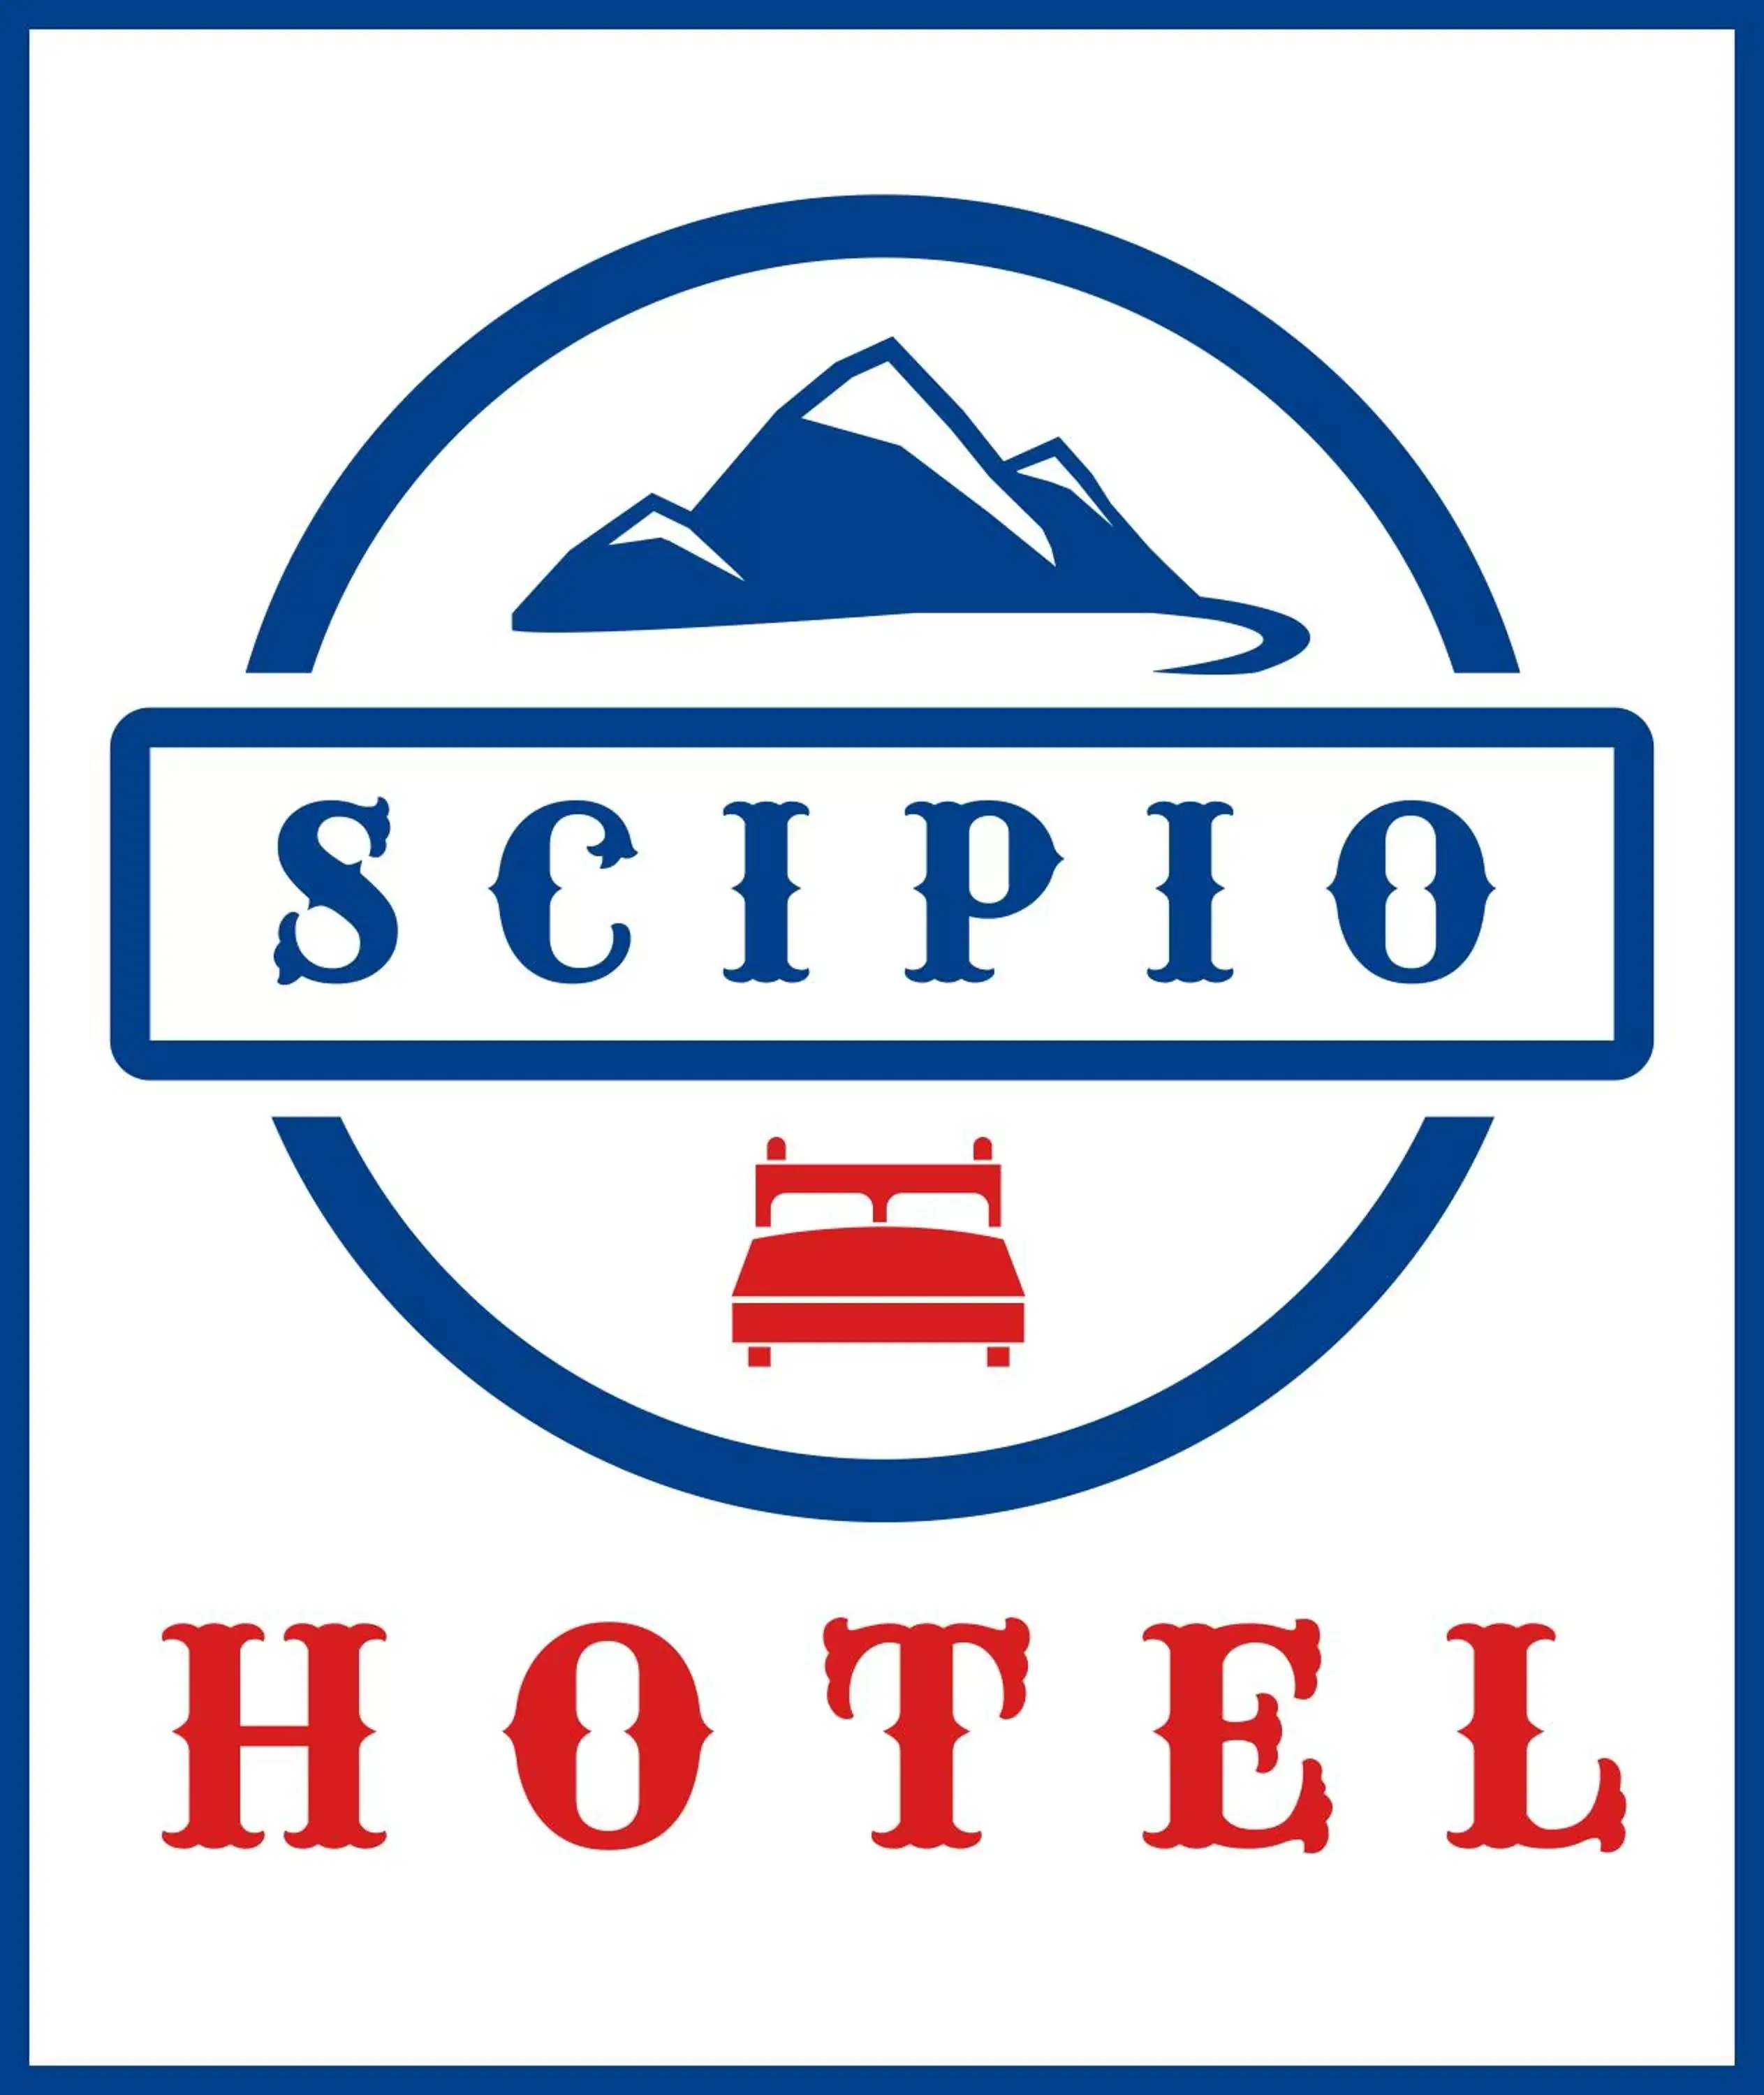 Property logo or sign in Scipio Hotel